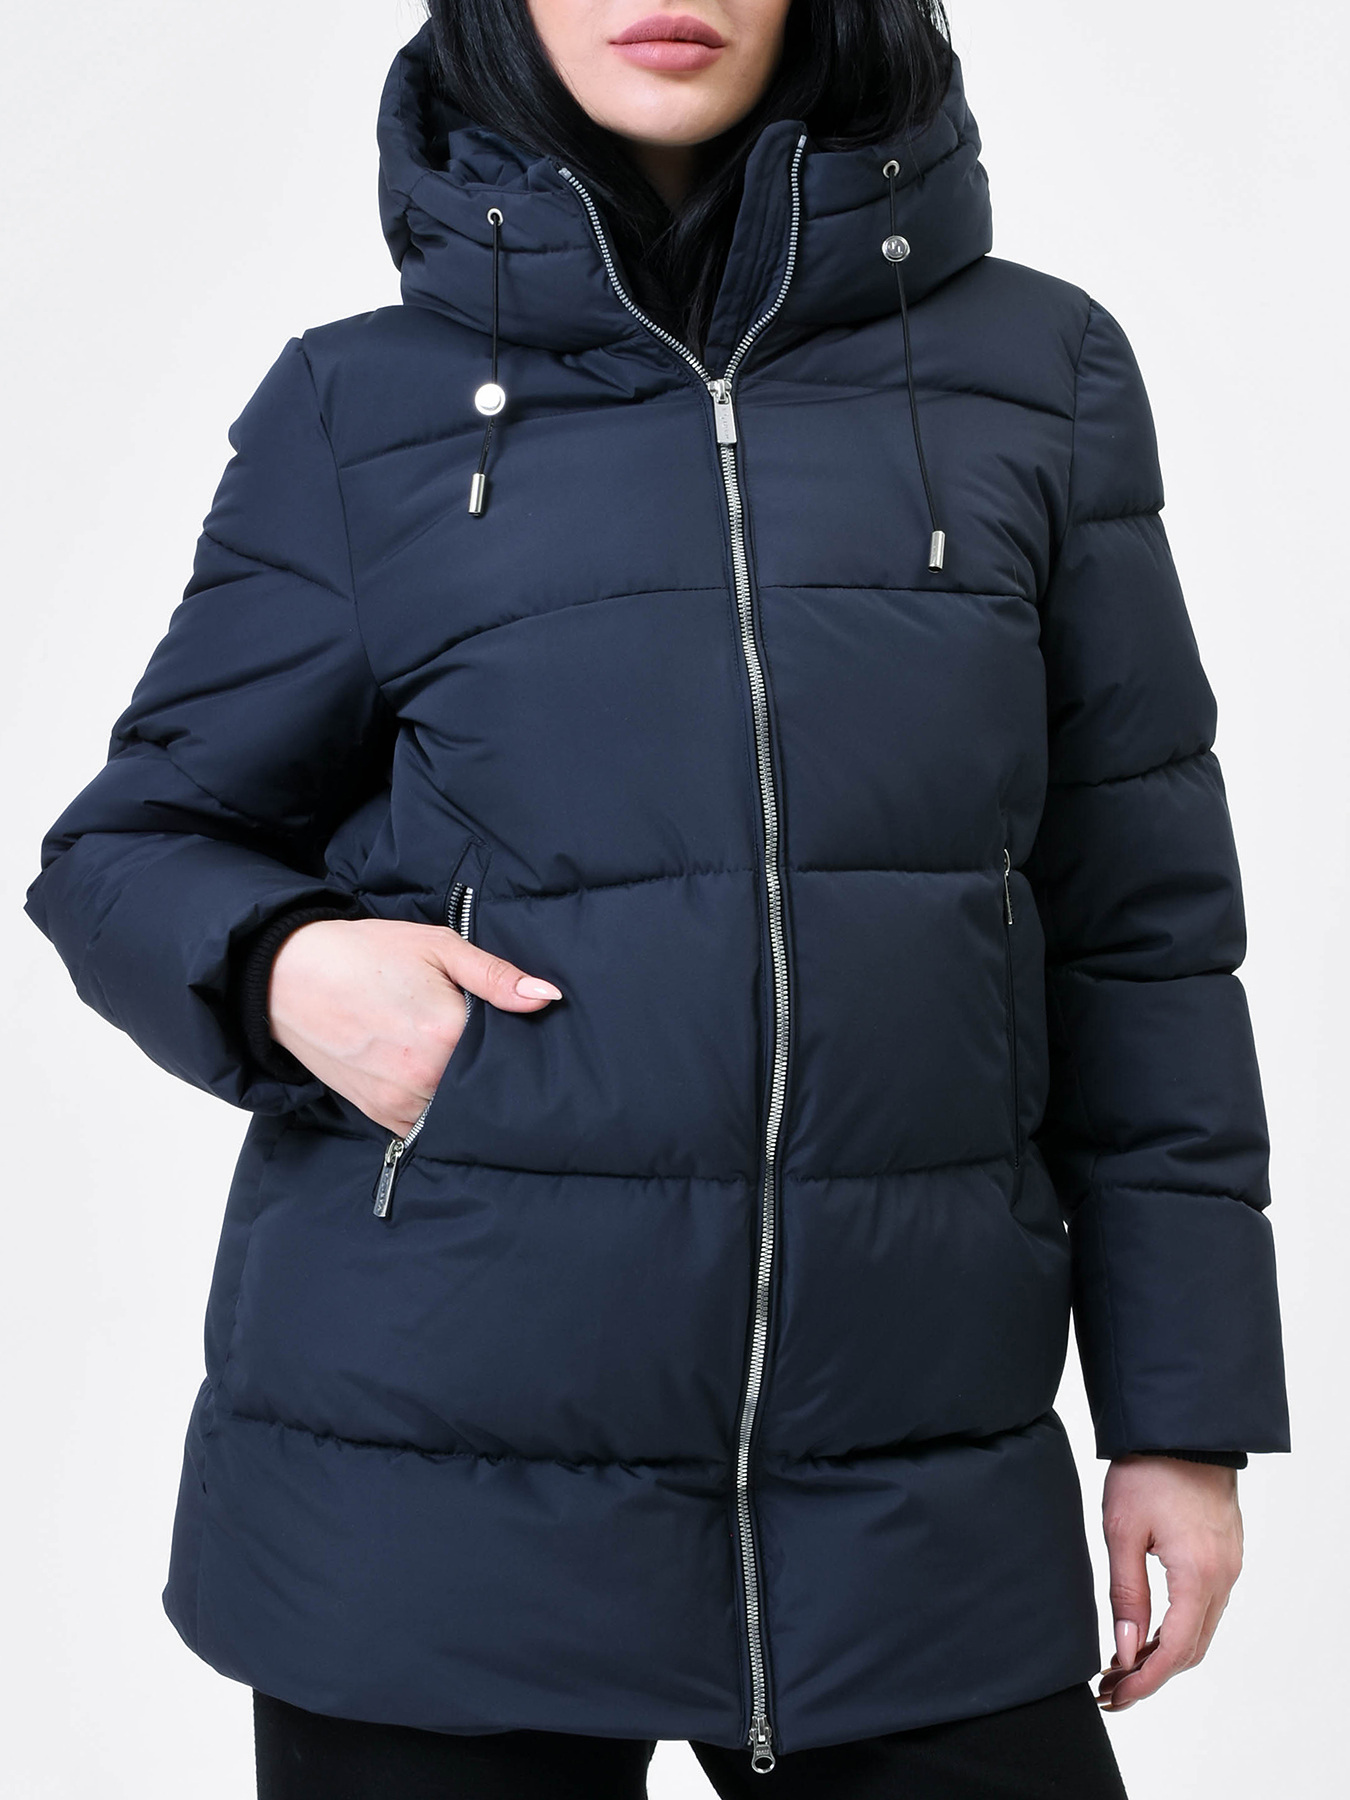 Пальто зимнее Maritta 433612-021, цвет темно-синий, размер 46